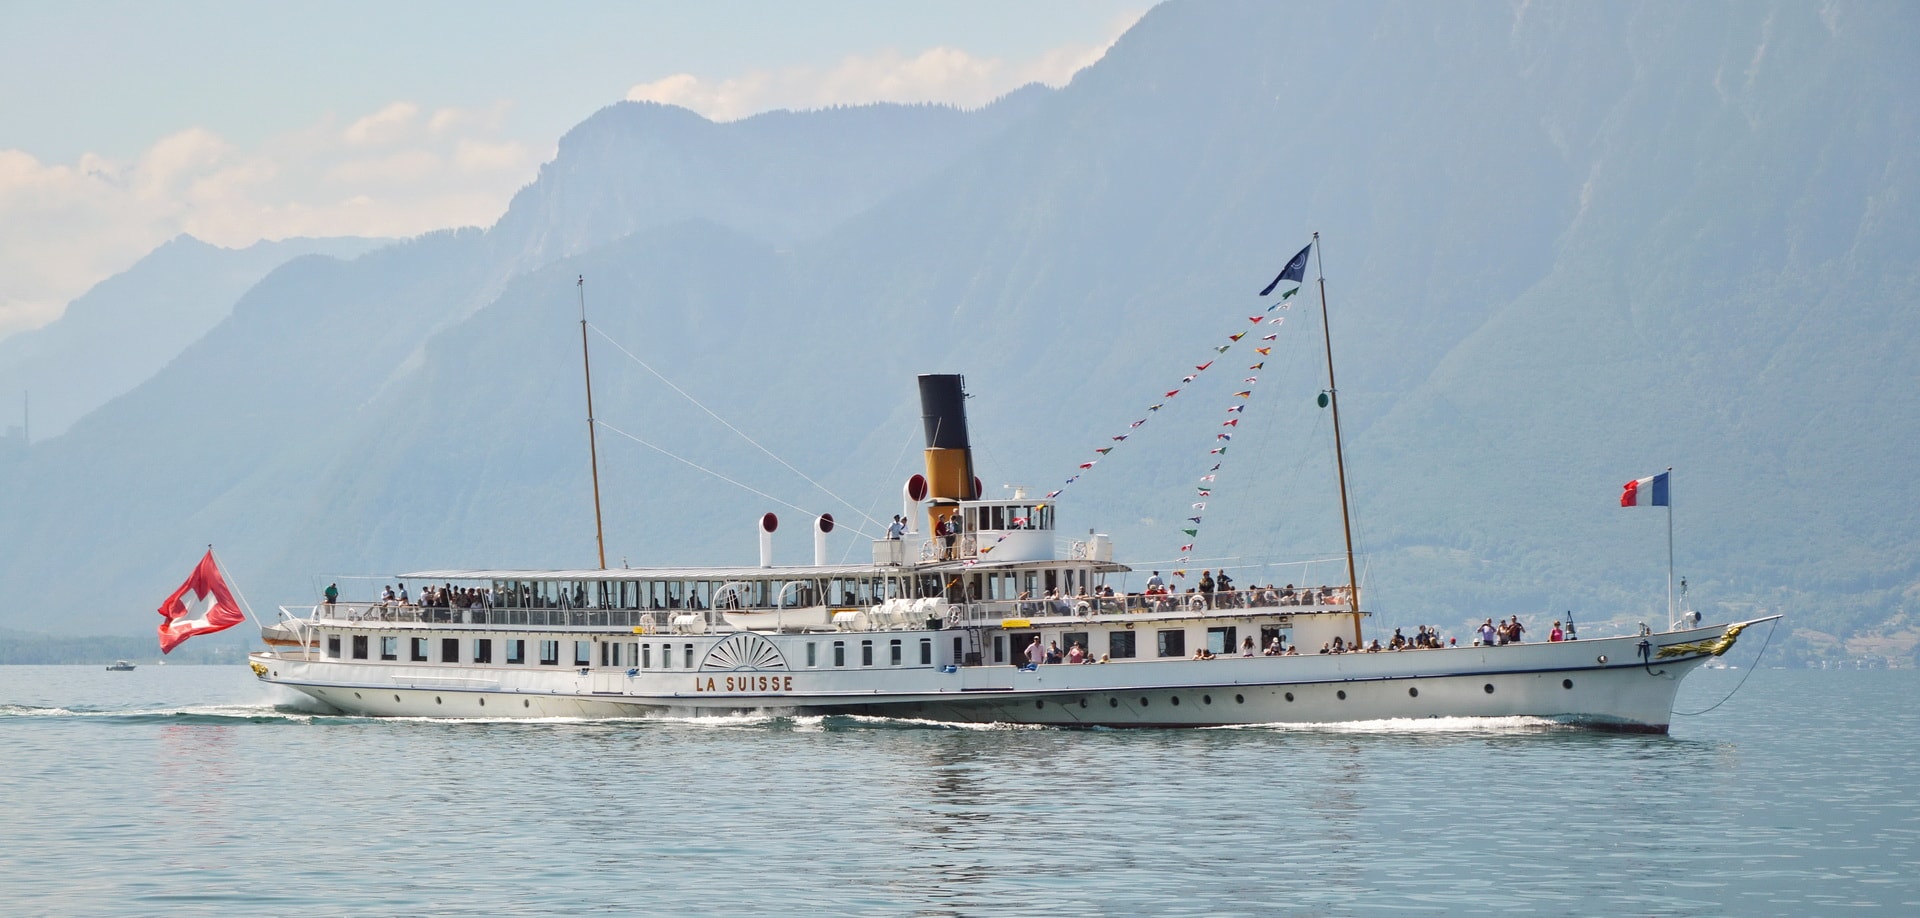 Regular boat trips are offered on Lake Geneva